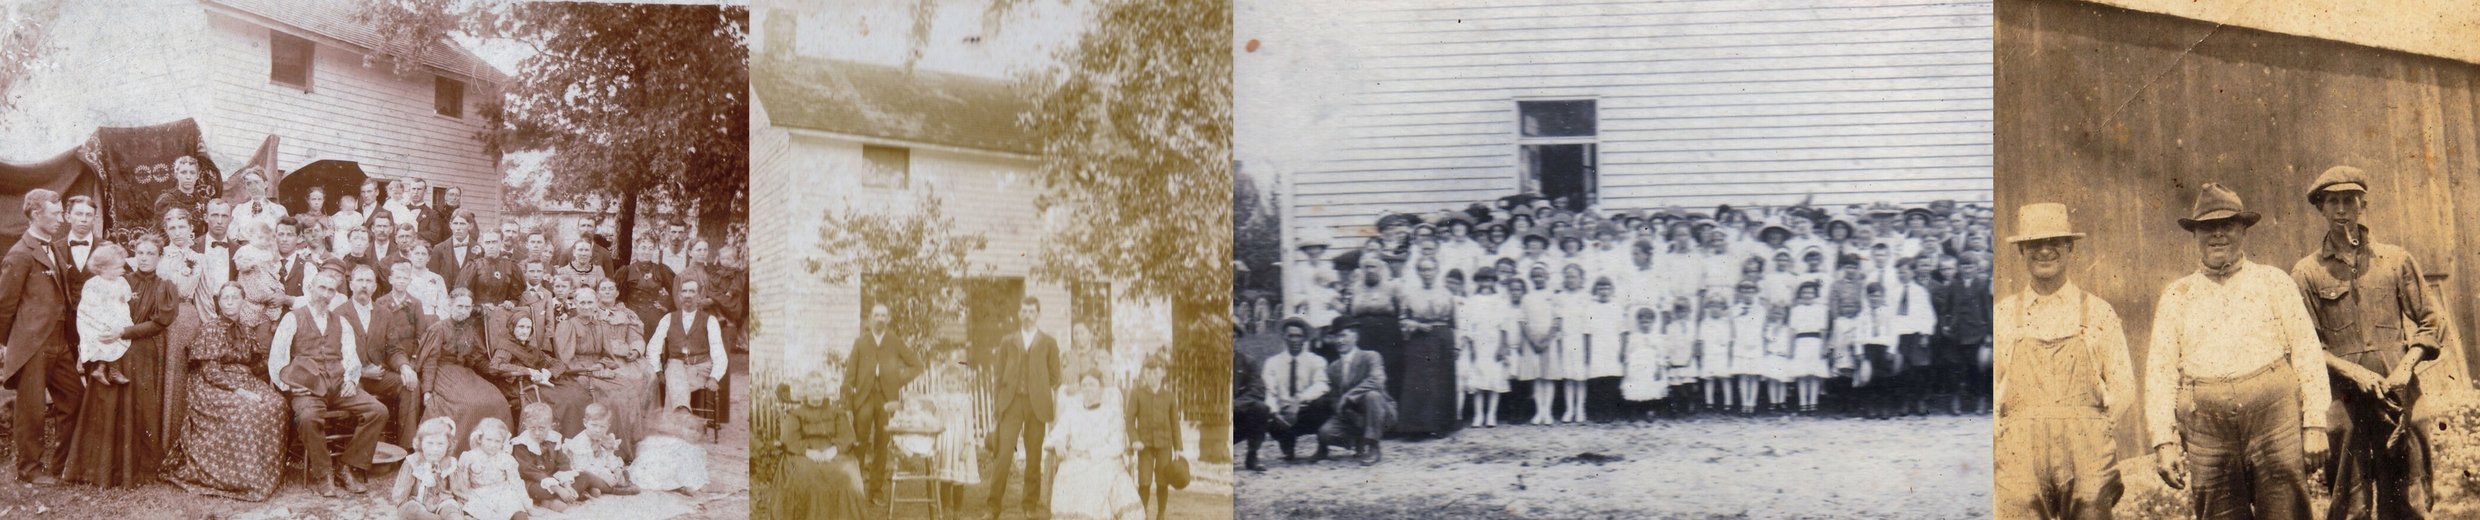 Way Back Wednesday - Genealogy Photographs - footer